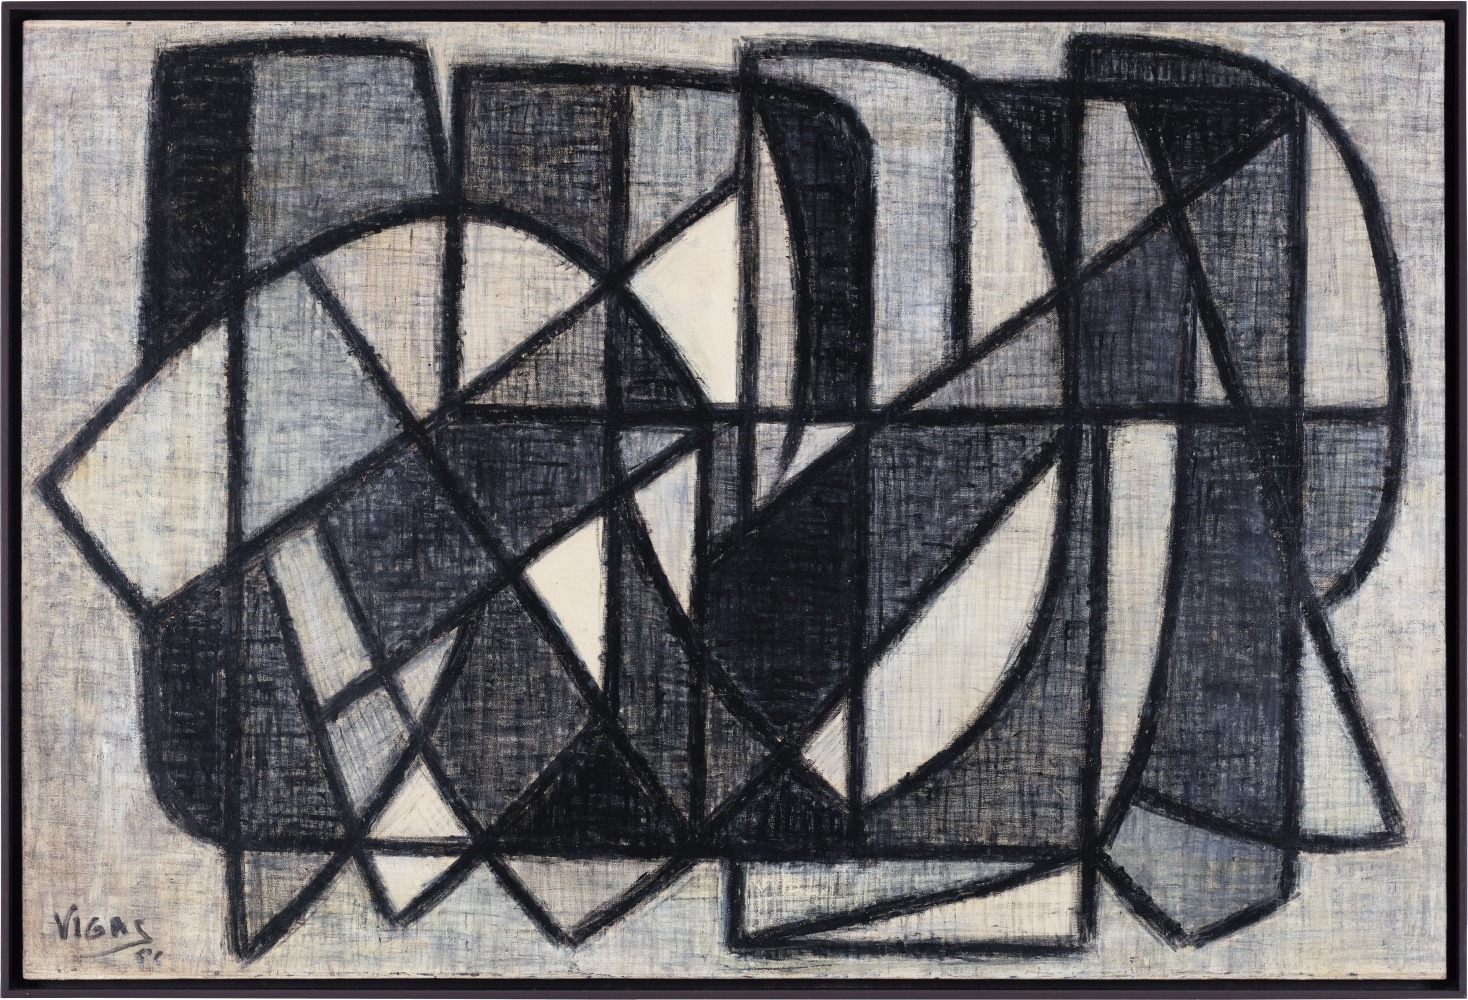 Oswaldo Vigas

Objeto Negro, 1956
&amp;Oacute;leo sobre tela
97h x 143w cm
38 24/127h x 56 38/127w in

&amp;Uacute;nica